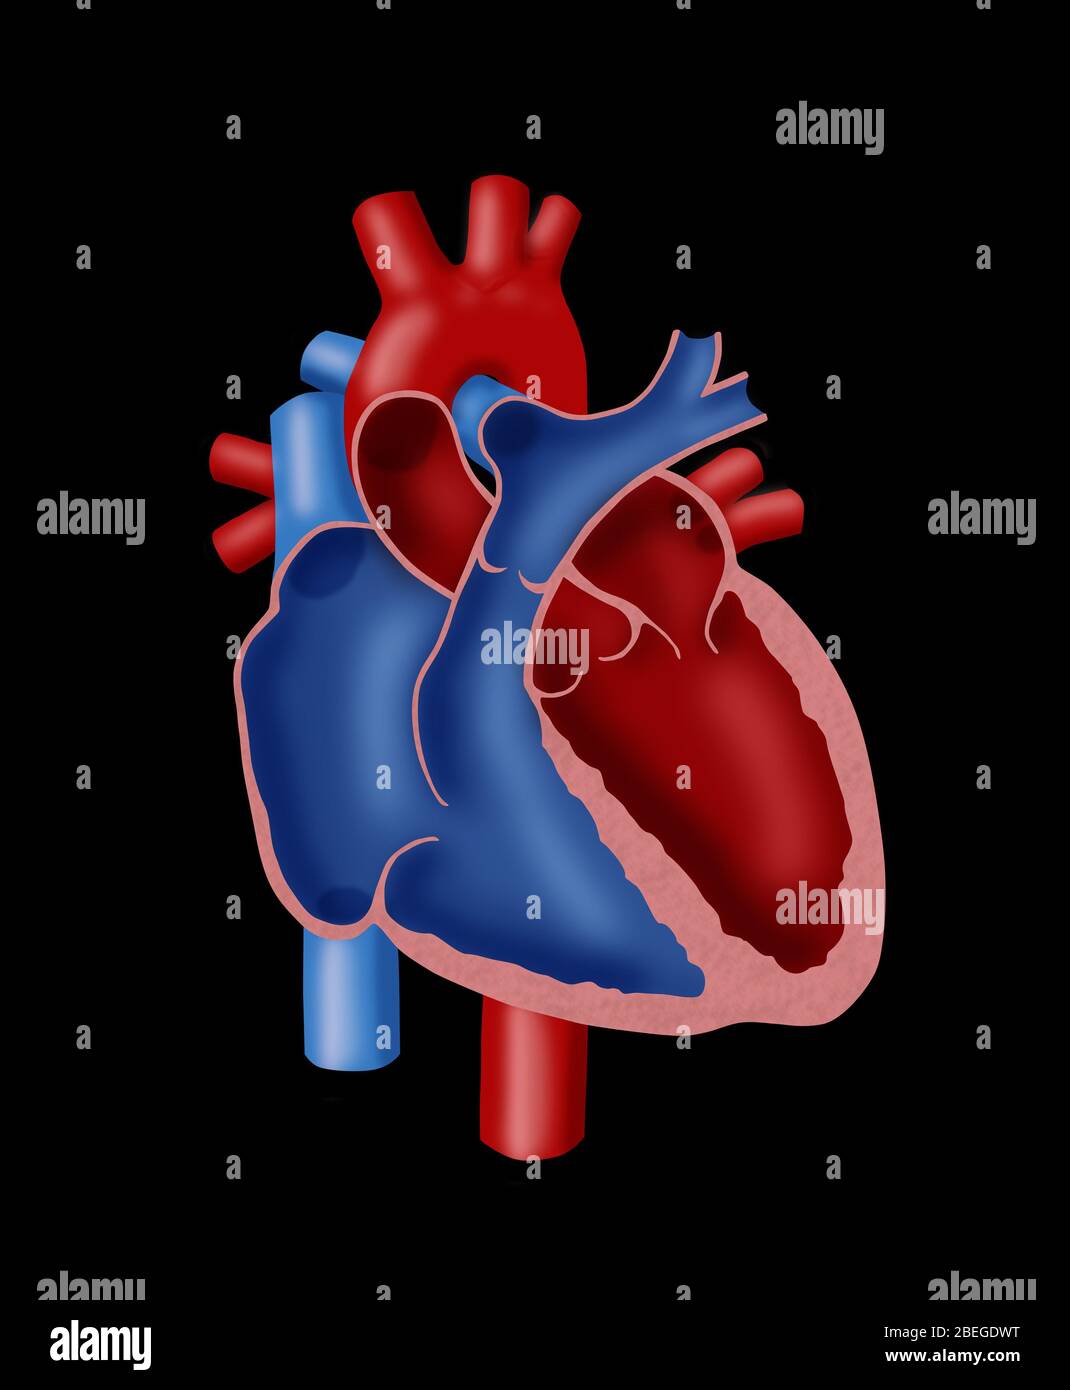 Anatomie des Herzens Stockfoto